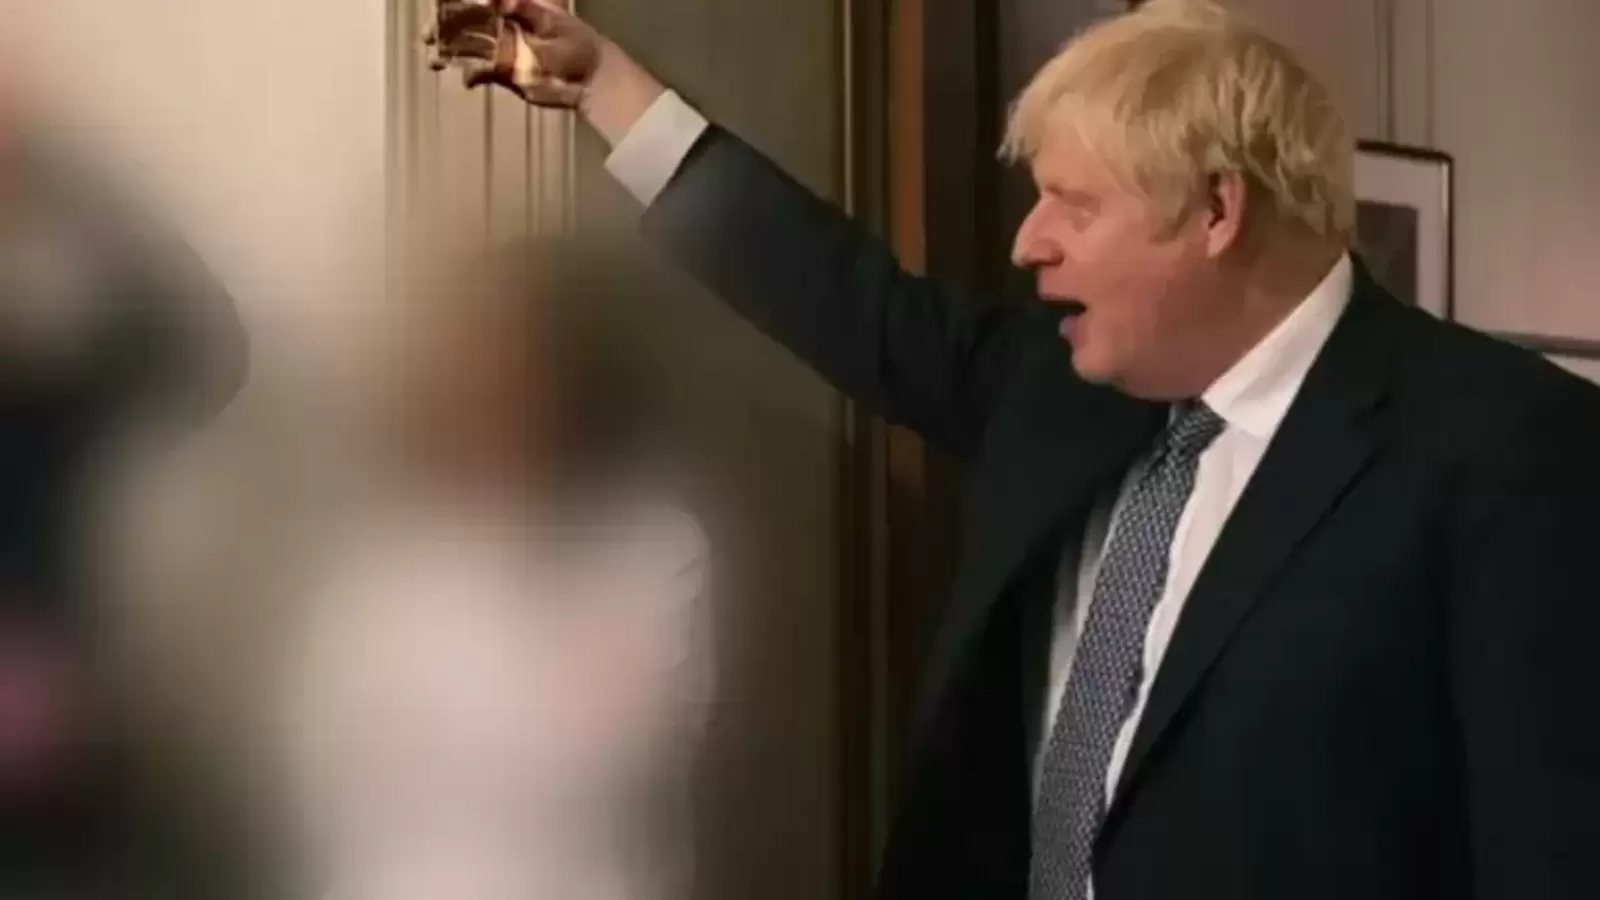 Boris Johnson pictured drinking at party during UK lockdown | World News - Hindustan Times